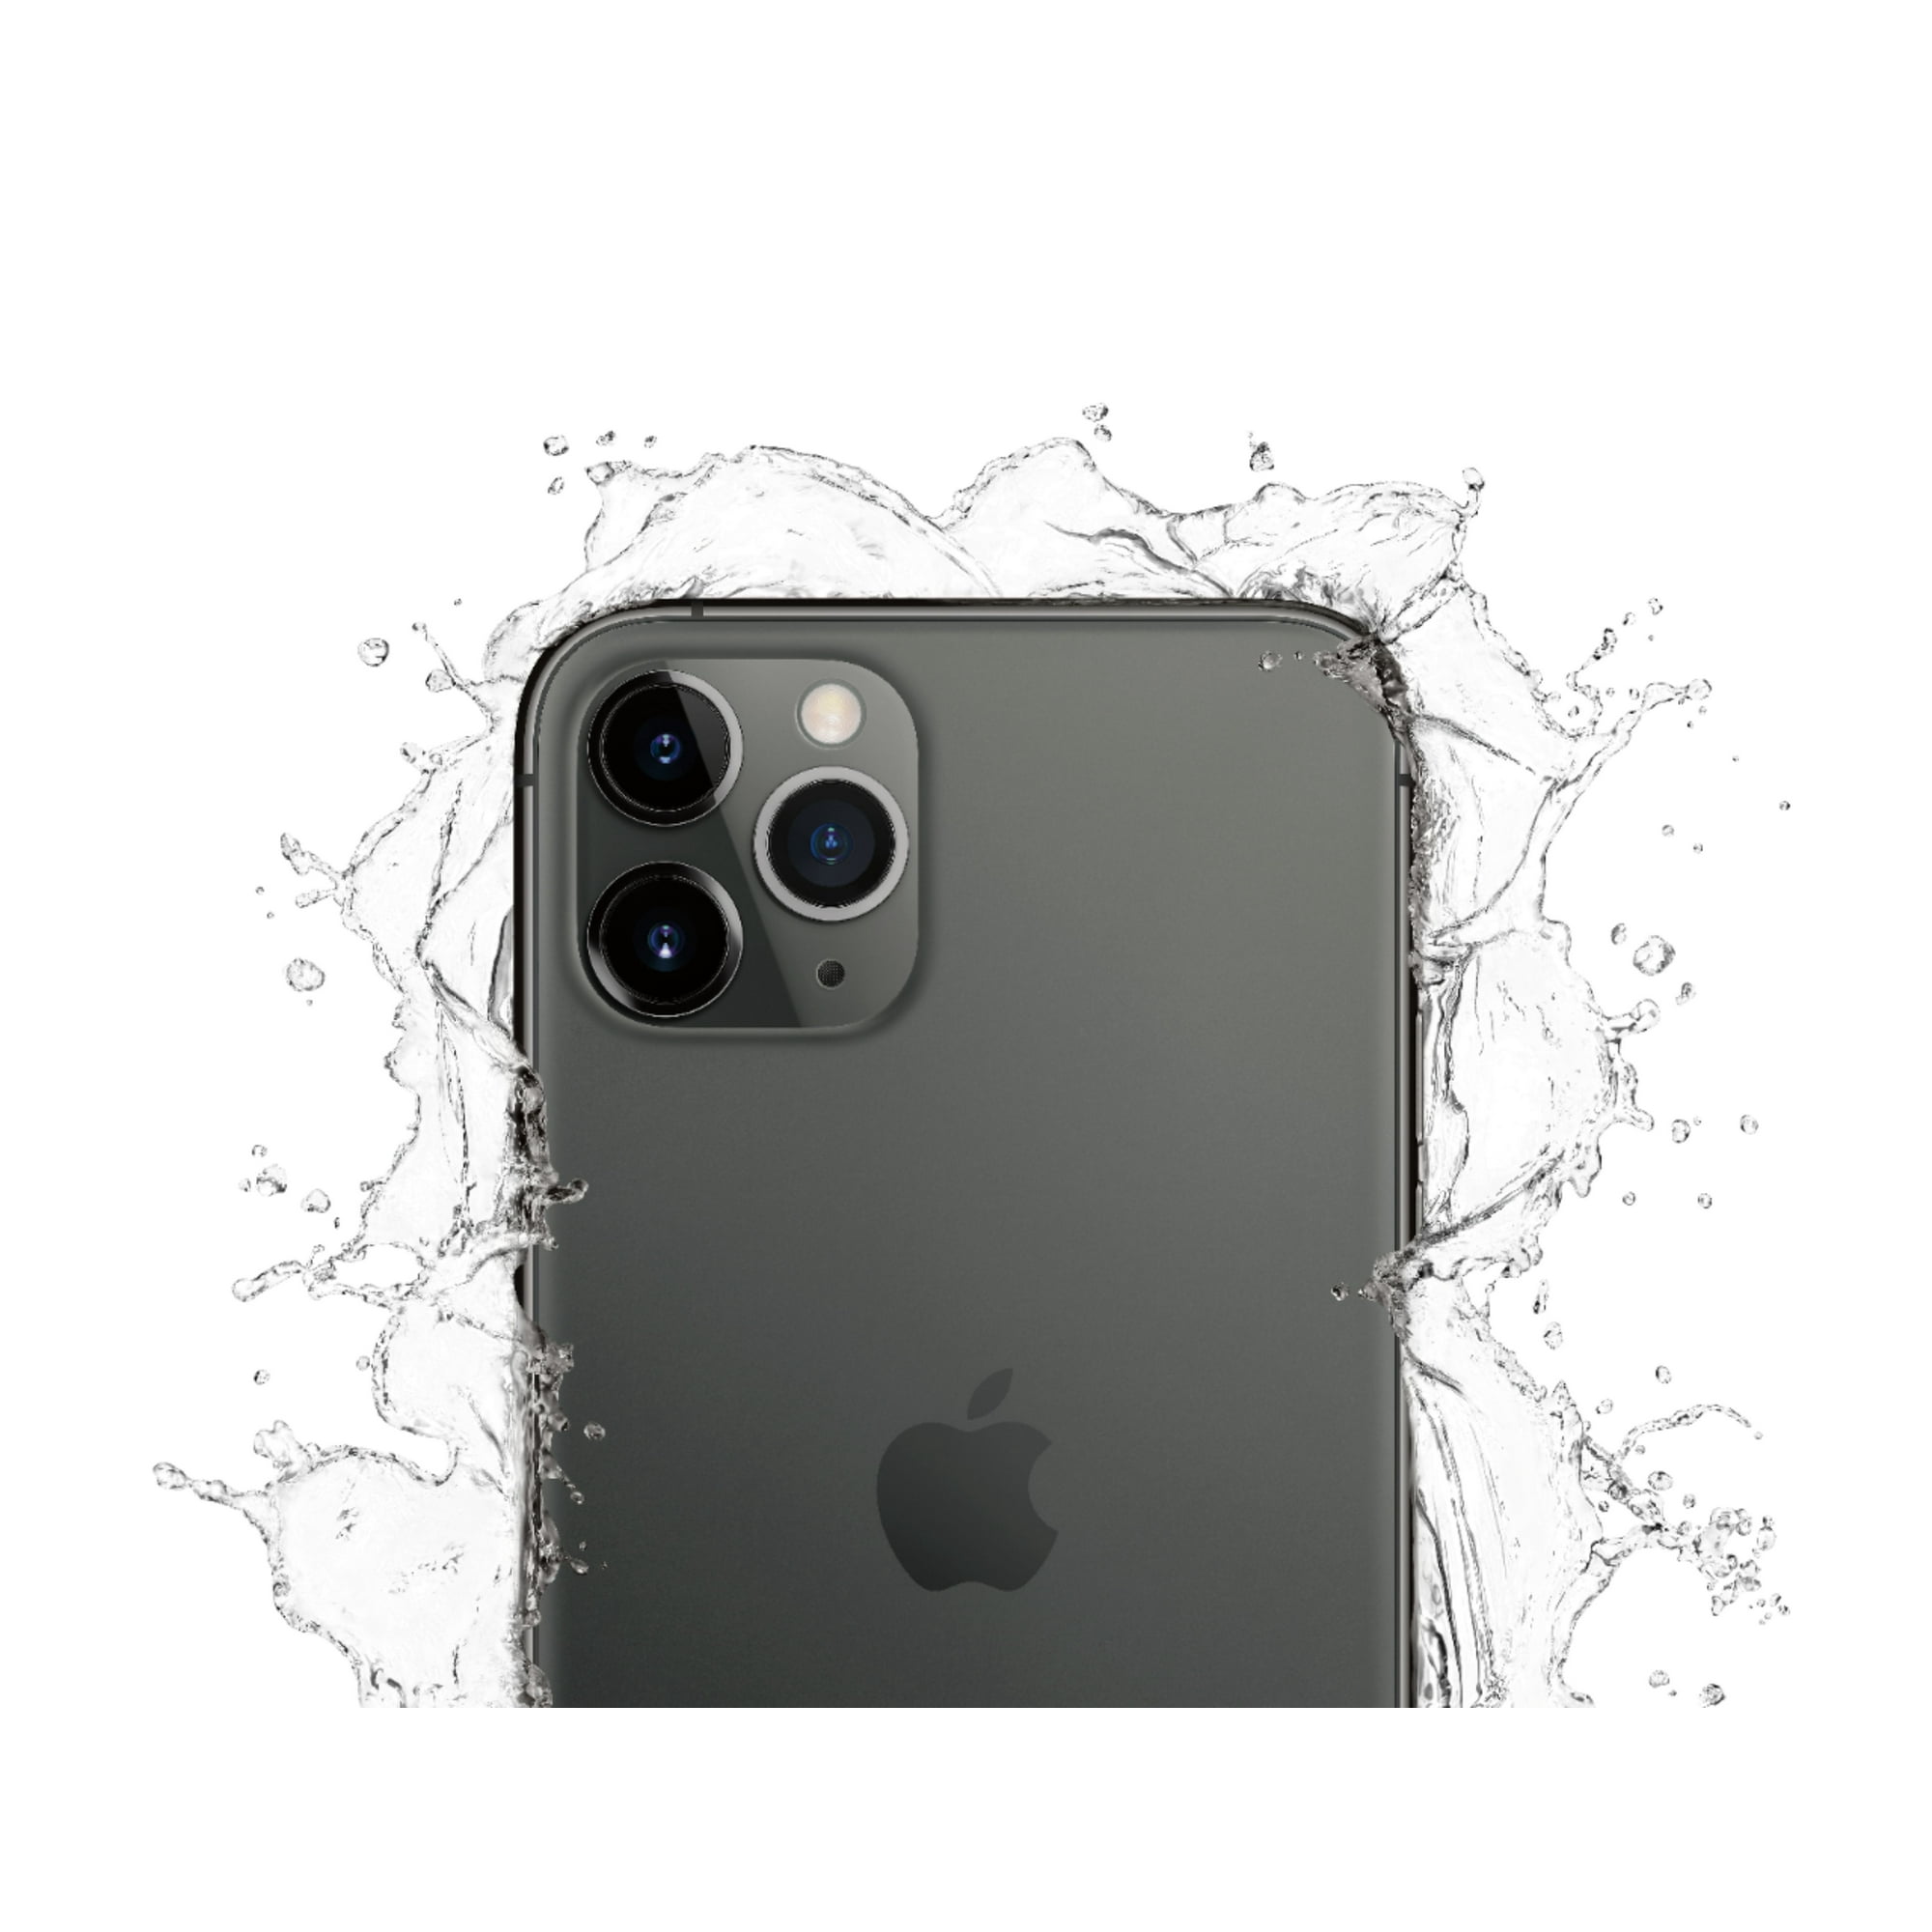 Like New  Apple iPhone 11 Pro Max 64GB Factory Unlocked 4G LTE Smartphone - Refurbished